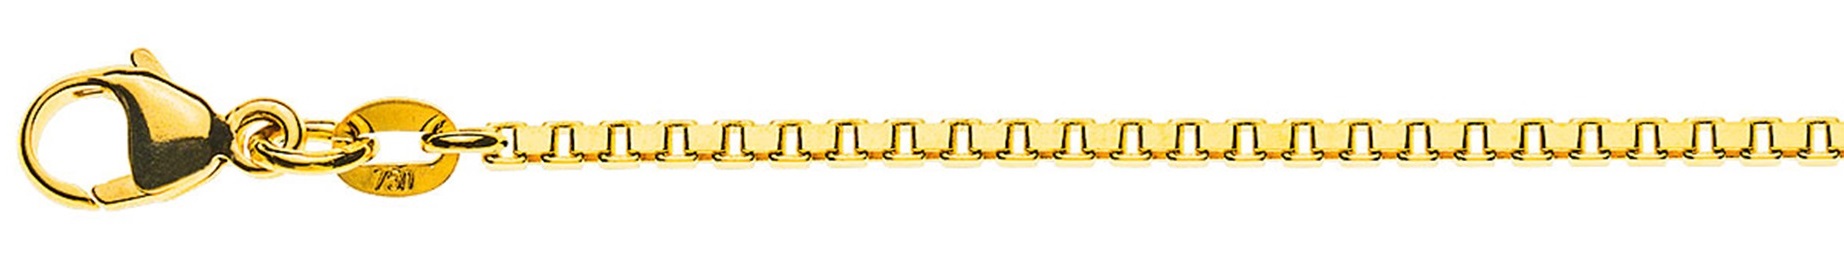 AURONOS Prestige Necklace yellow gold 18K Venetian chain diamond 60cm 1.6mm